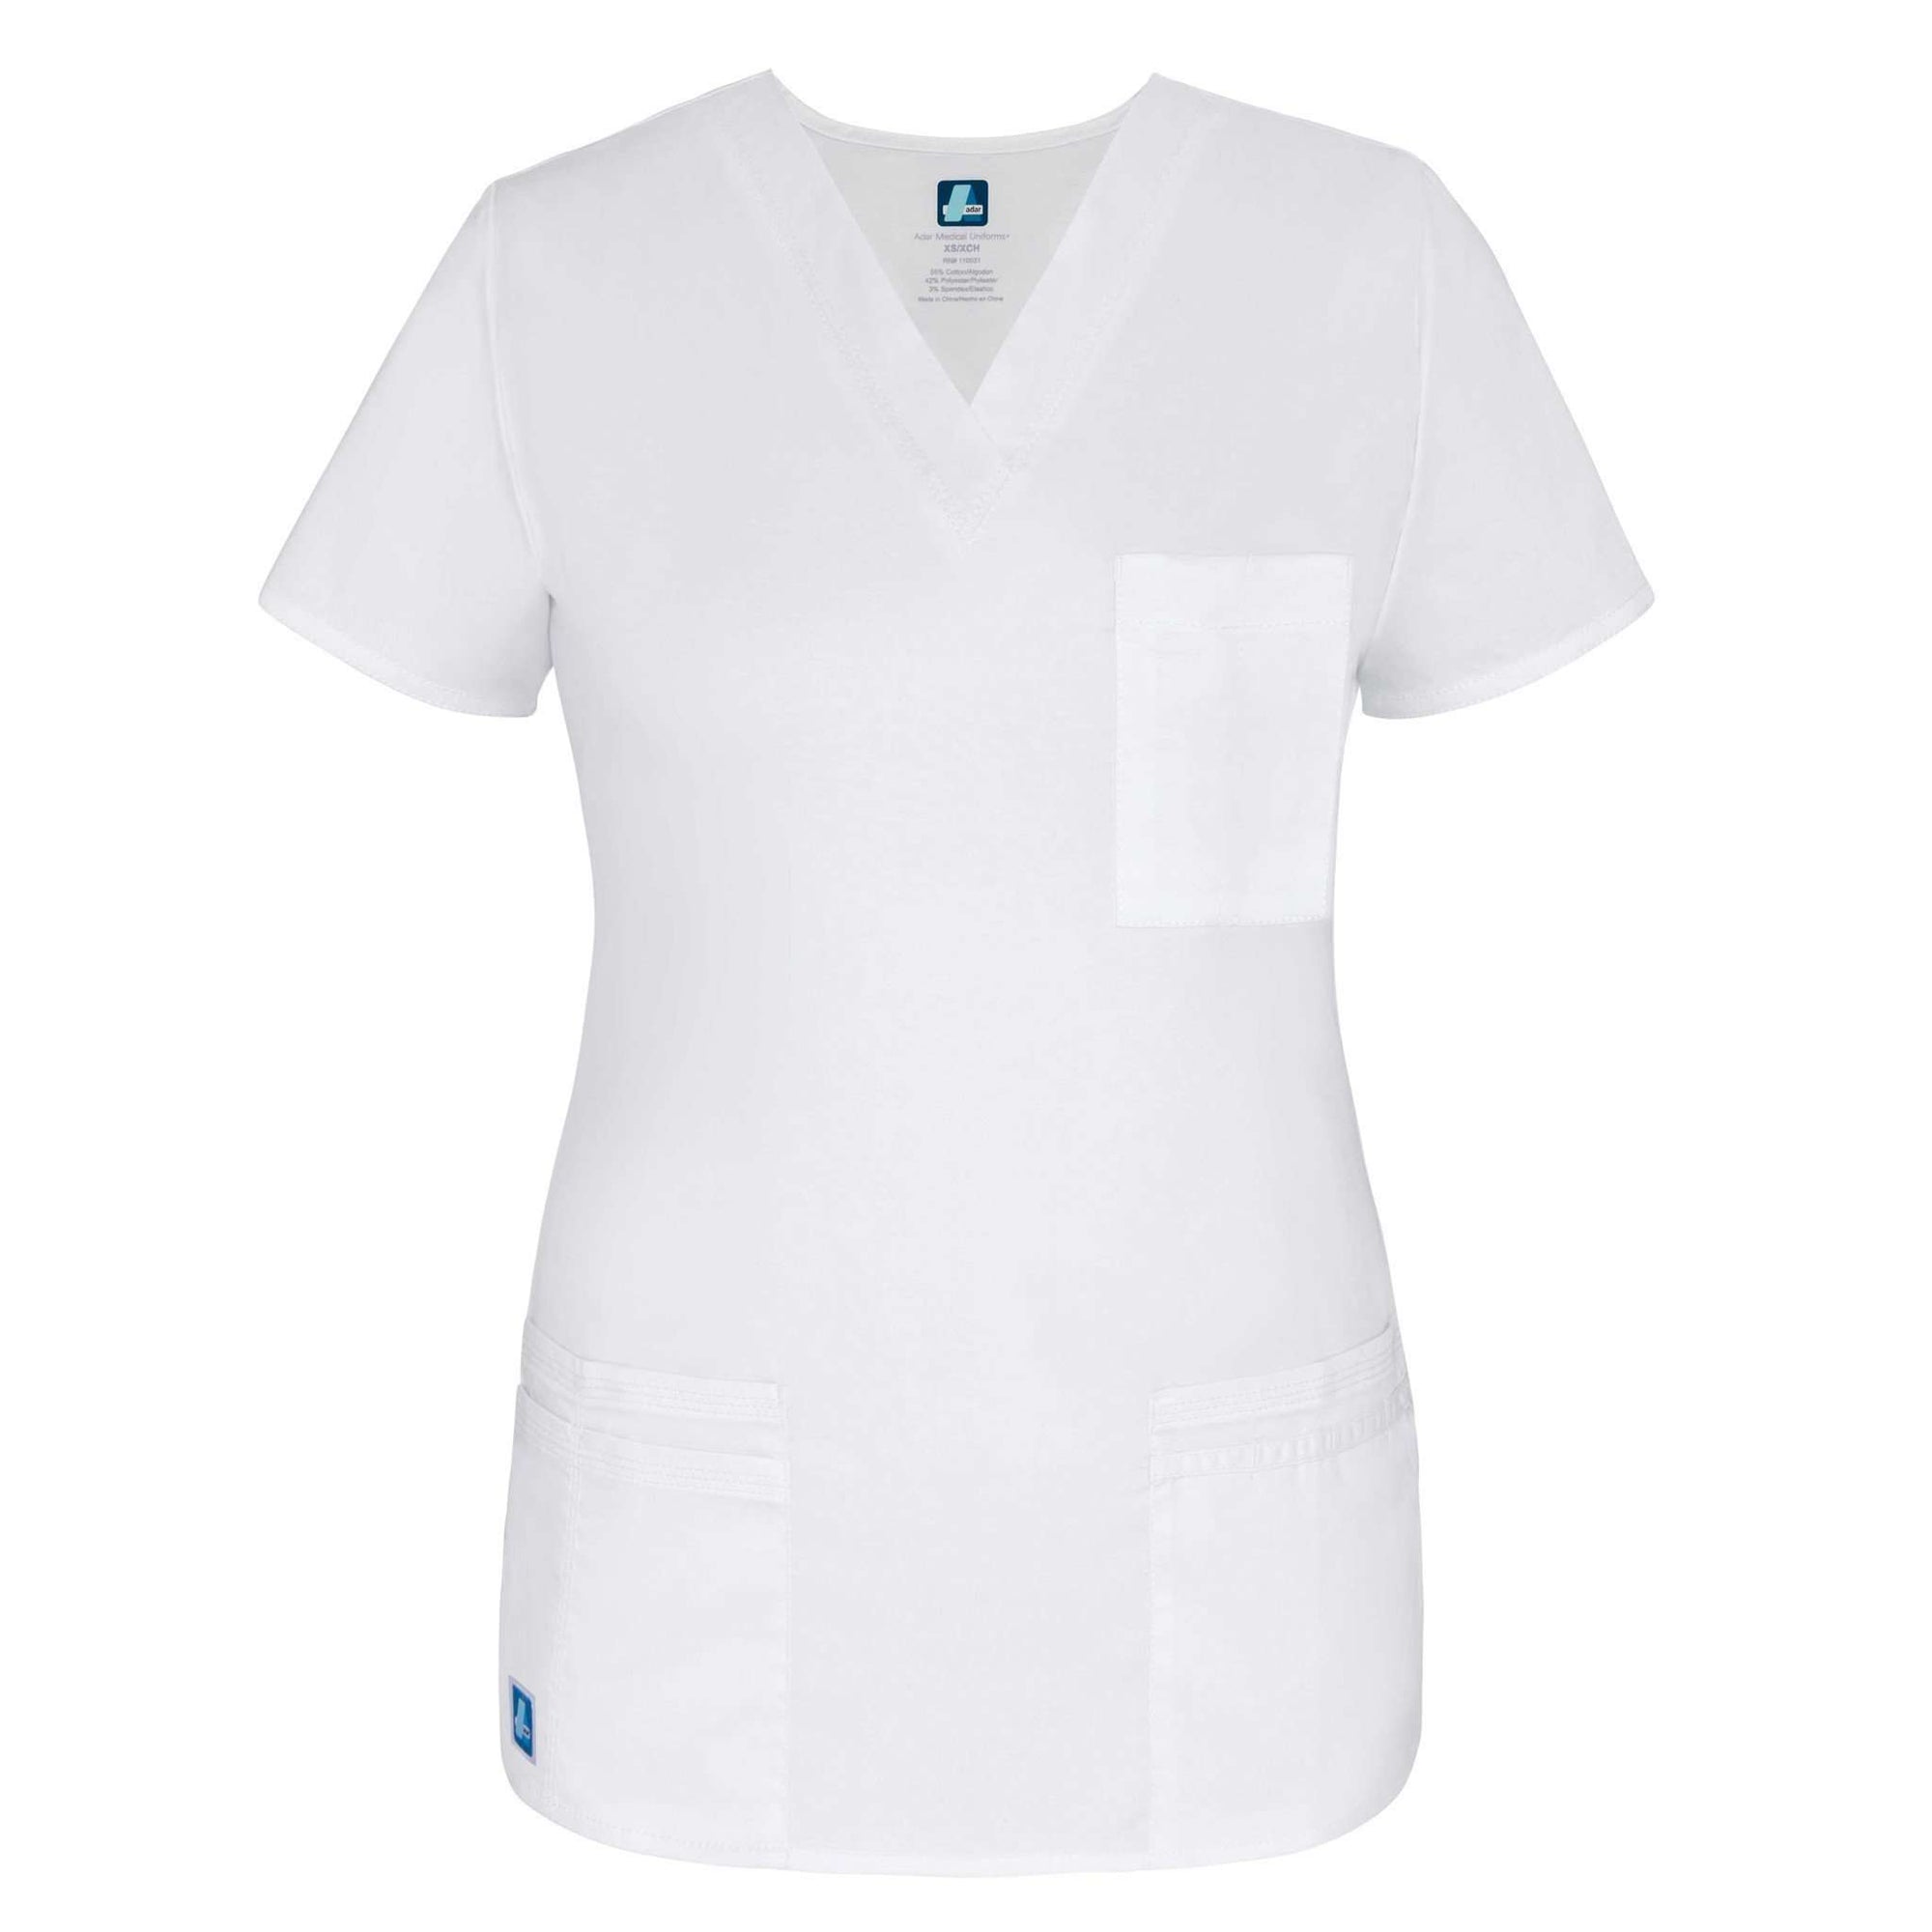  Adar - uniforms Medical Uniform Tops uniforms online Adar Pop-Stretch Junior Fit TaskWear V-Neck Scrub Top - SchoolUniforms.com